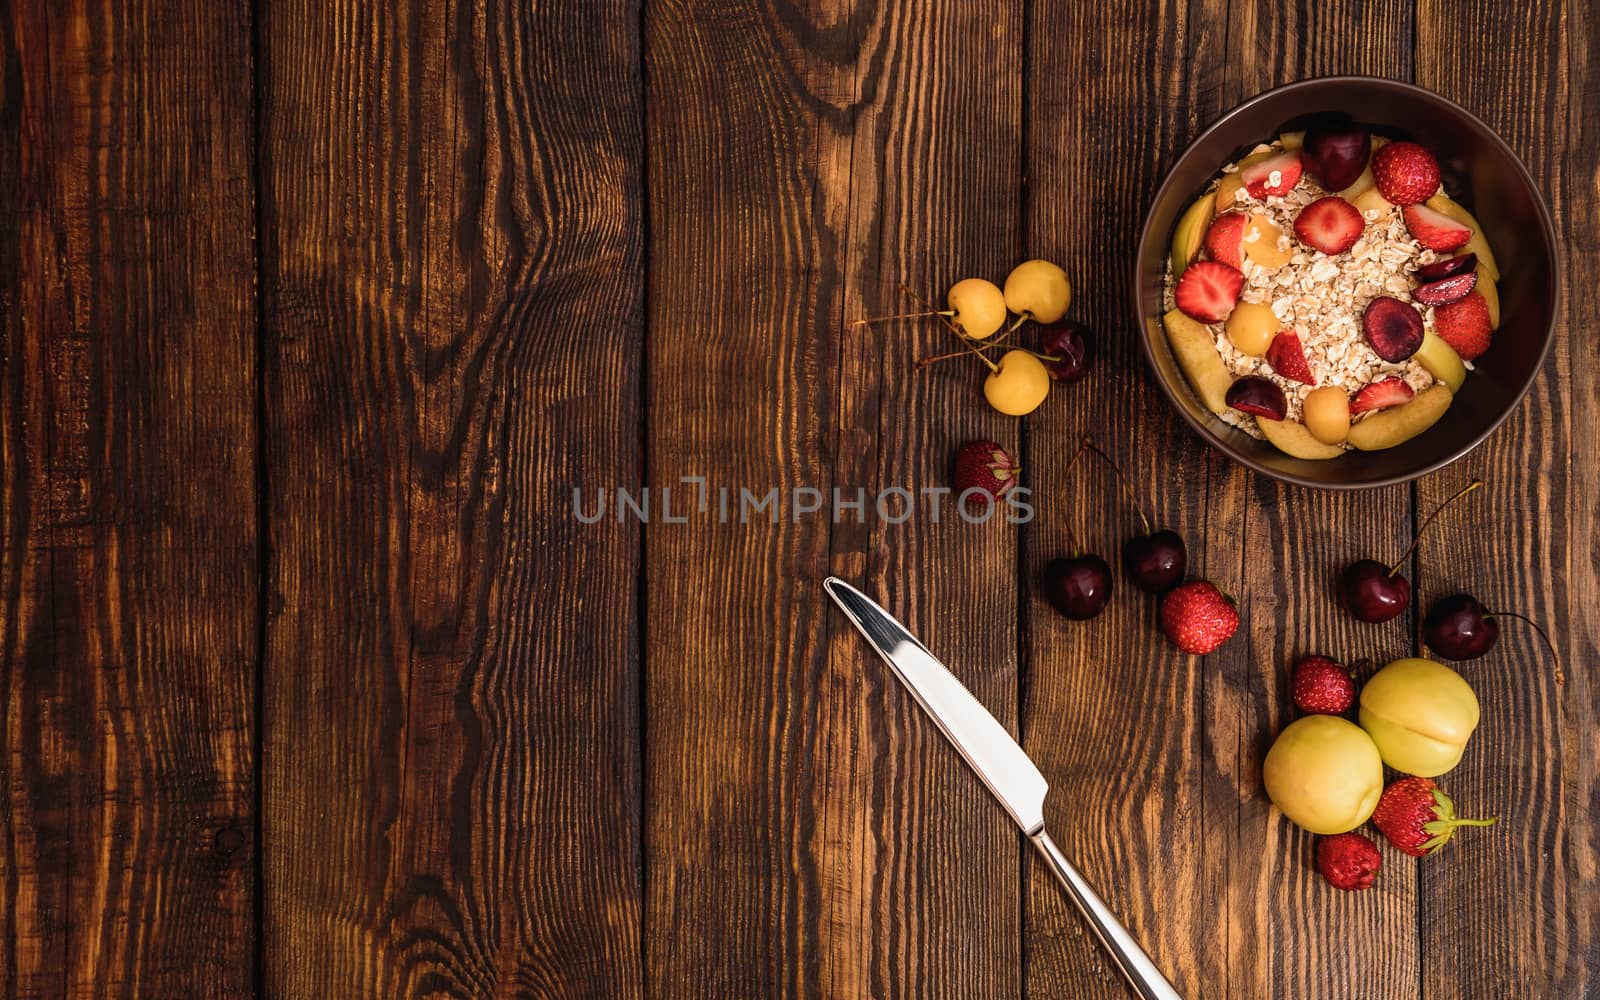 Breakfast with porridge, ripe fruits and berries by Seva_blsv